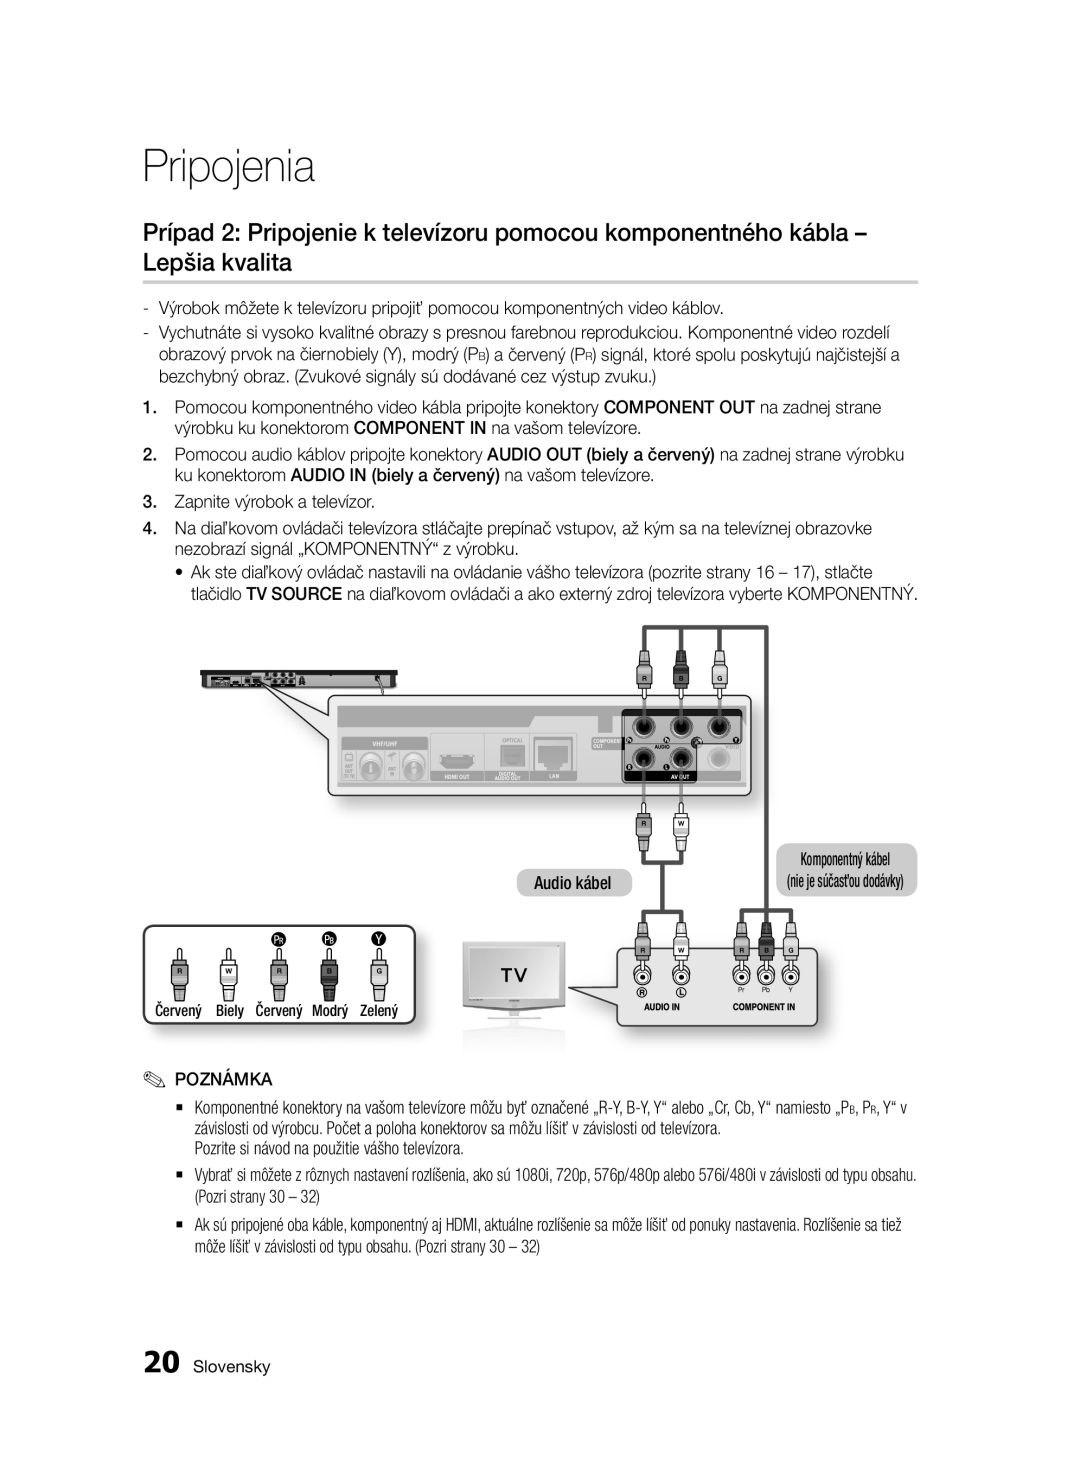 Samsung BD-E6300/EN manual Pripojenia, Slovensky 